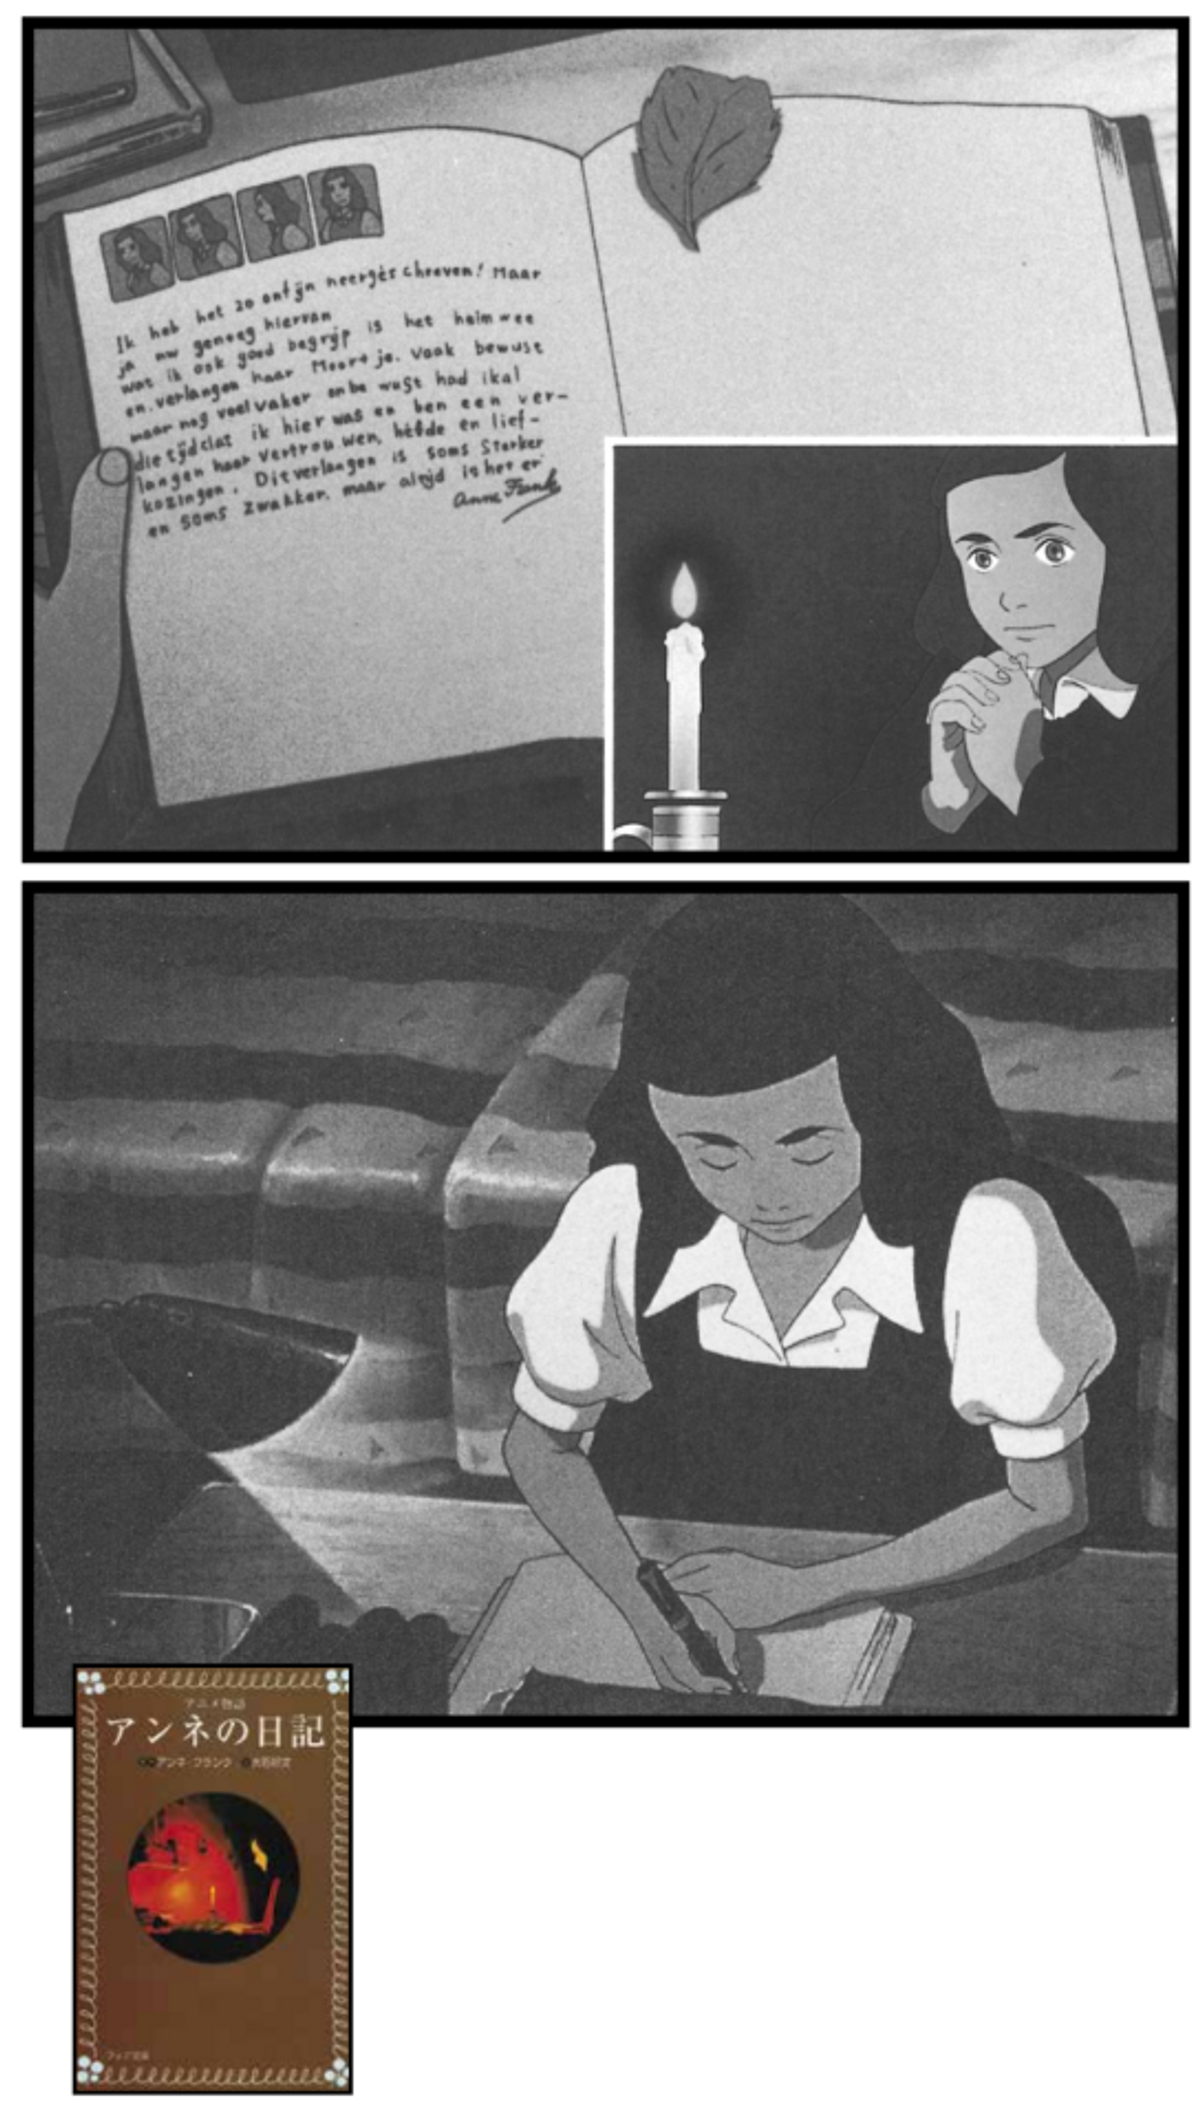 Anime Monogatari Anne No Nikki (Animation Story The Diary of Anne) originally written by Anne Frank, written by Yoshifumi Ohishi, published by Rironsha.